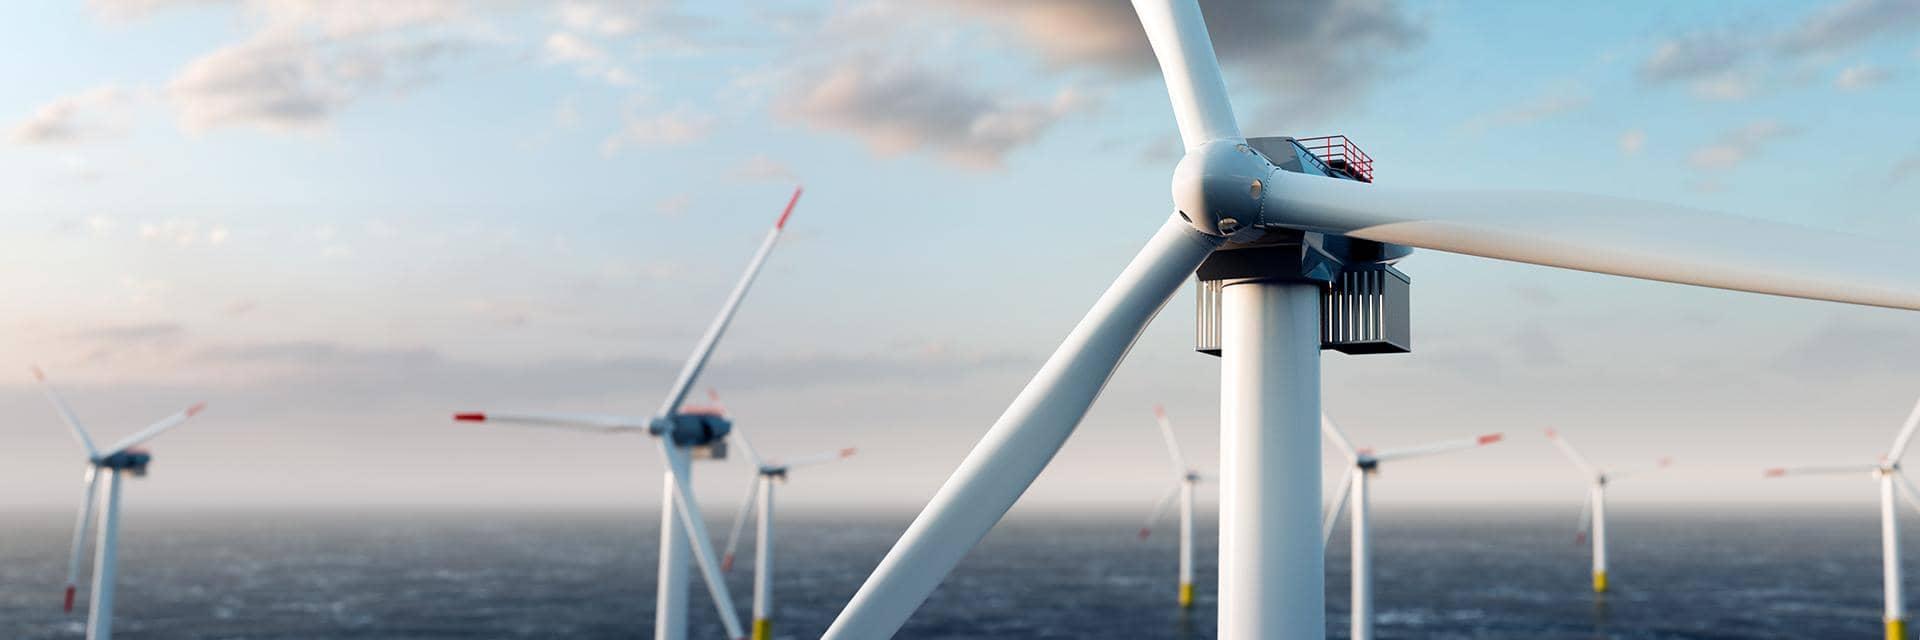 sustainable power wind turbines